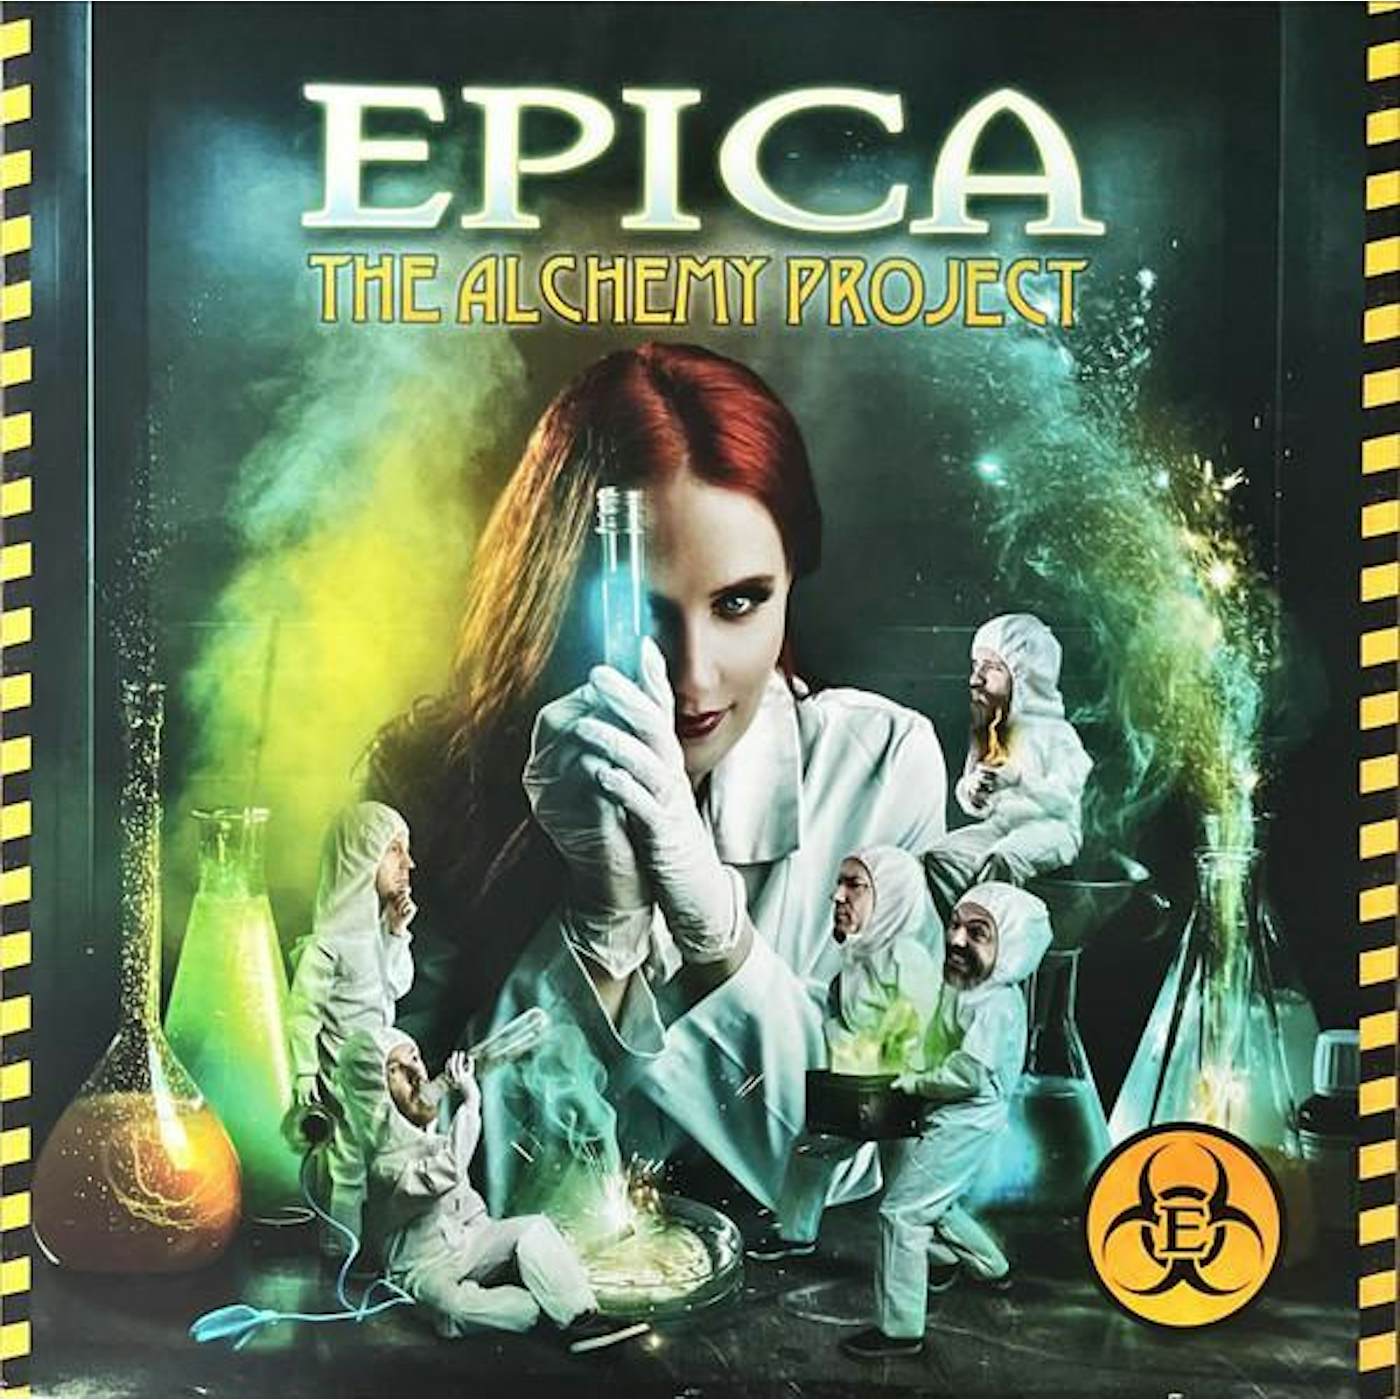 Epica ALCHEMY PROJECT Vinyl Record